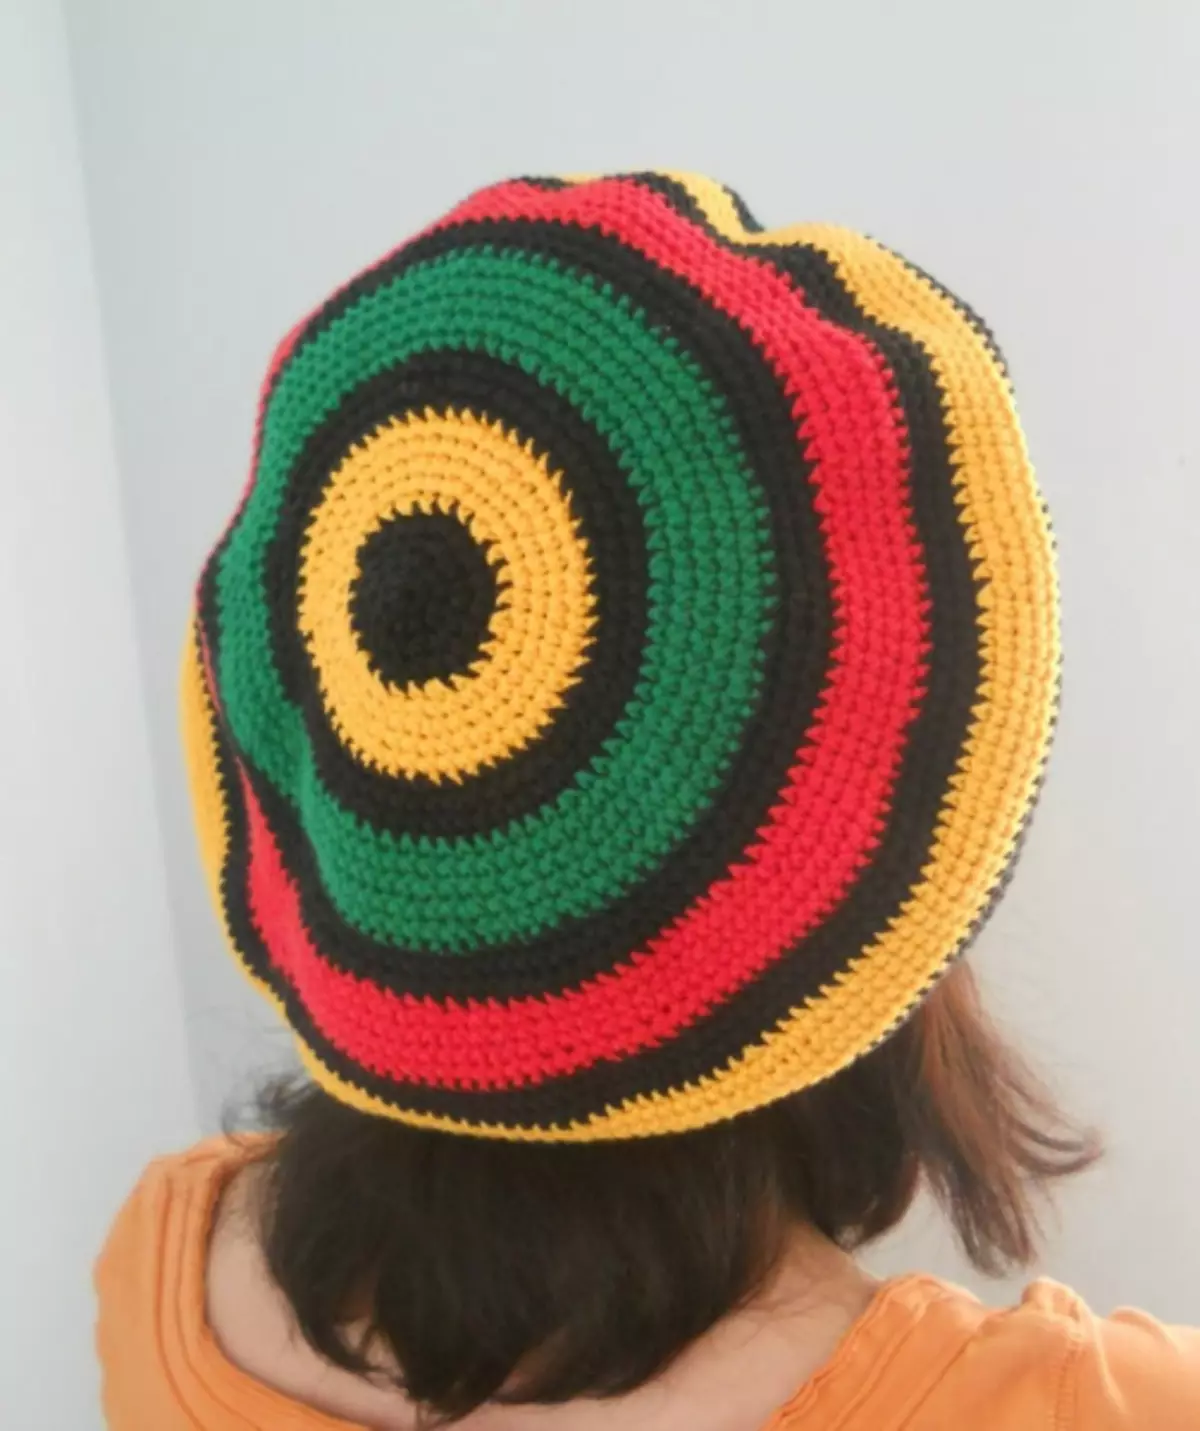 Crochet Knitting: Masomo ya Video kwa Kompyuta na Sampuli.